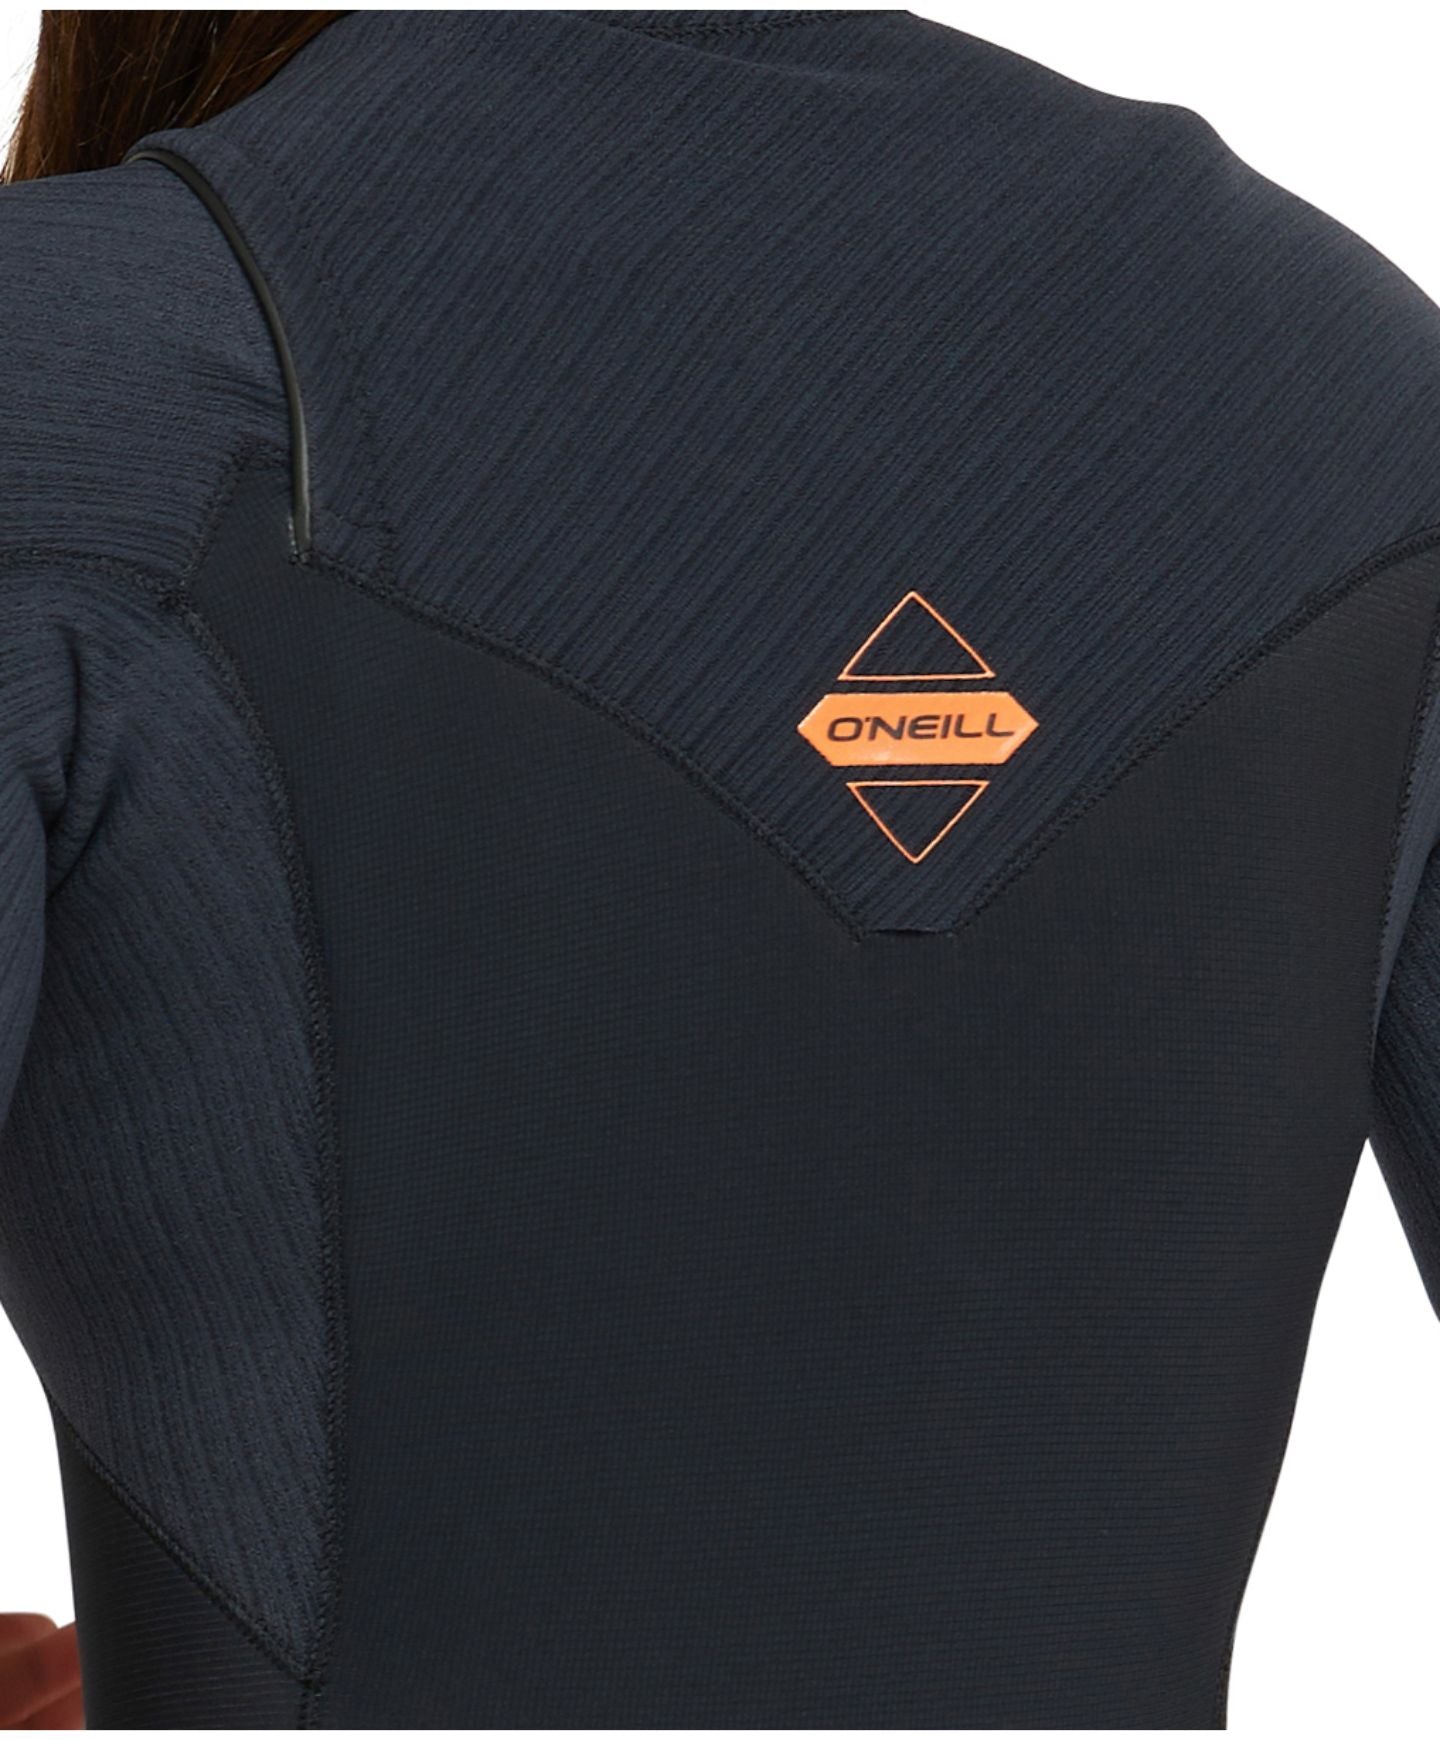 Women's HyperFreak Short Sleeve Spring Suit 2mm Wetsuit - Black